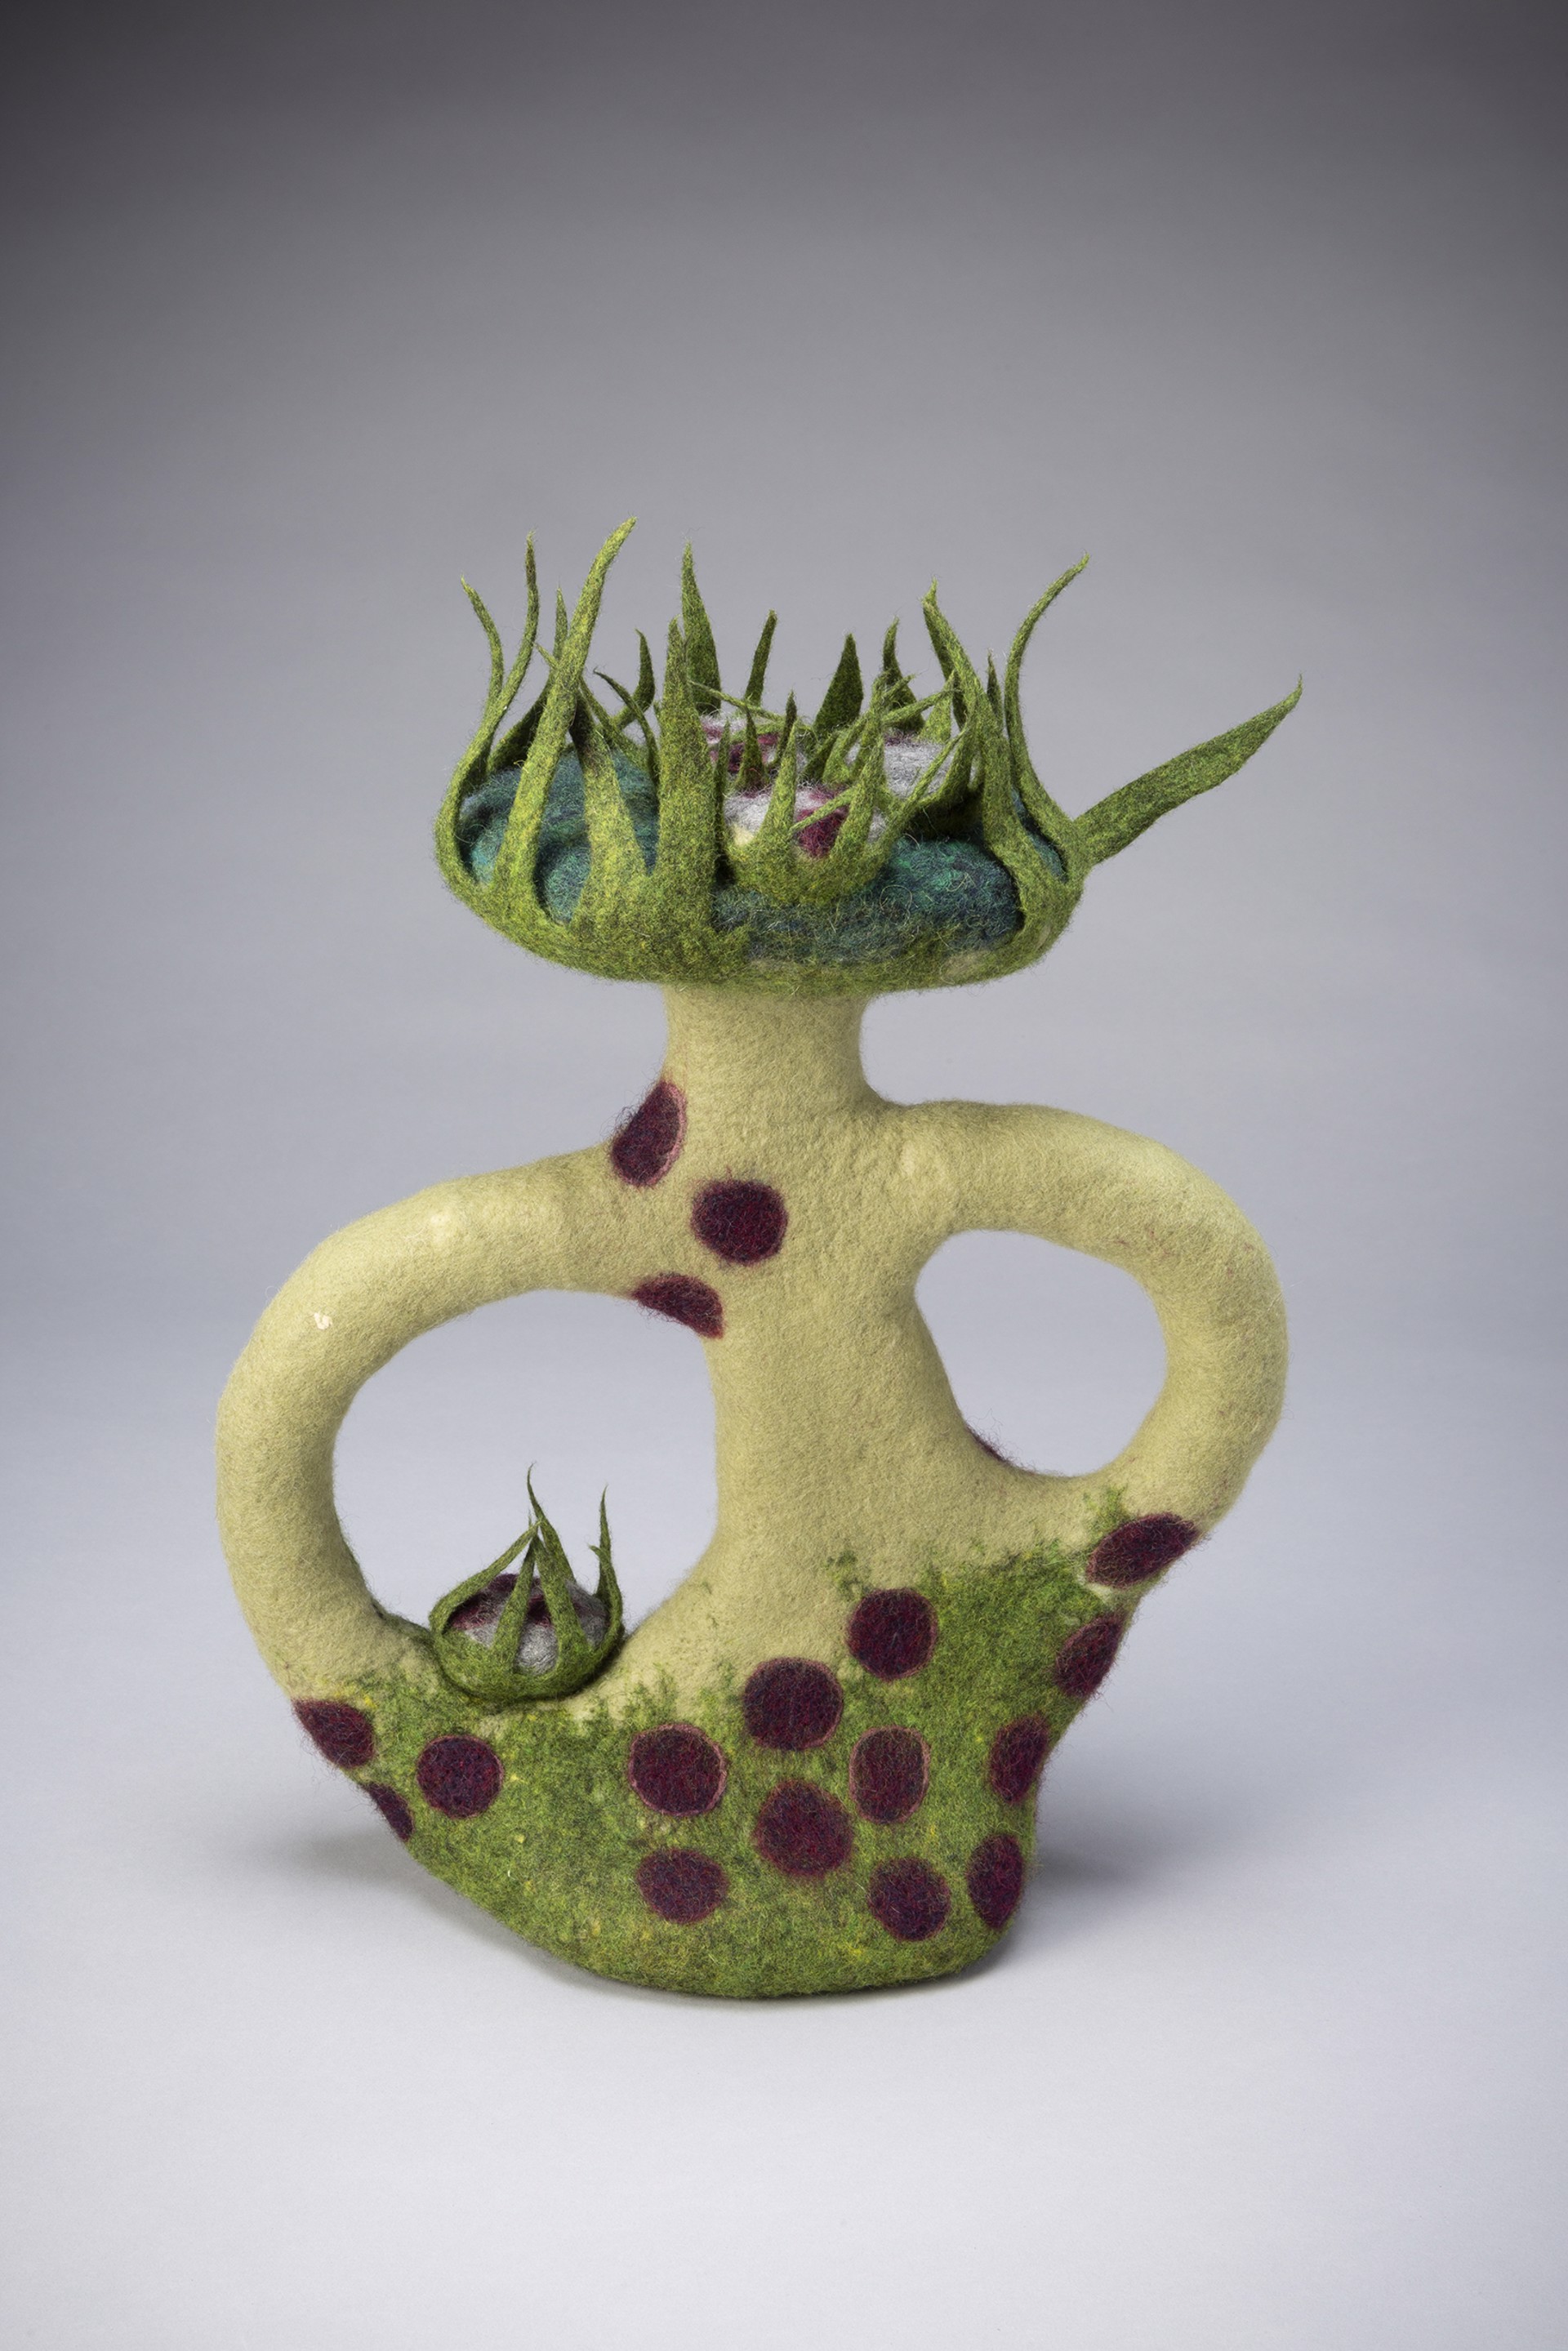 Tree Frog by Karen Thurman